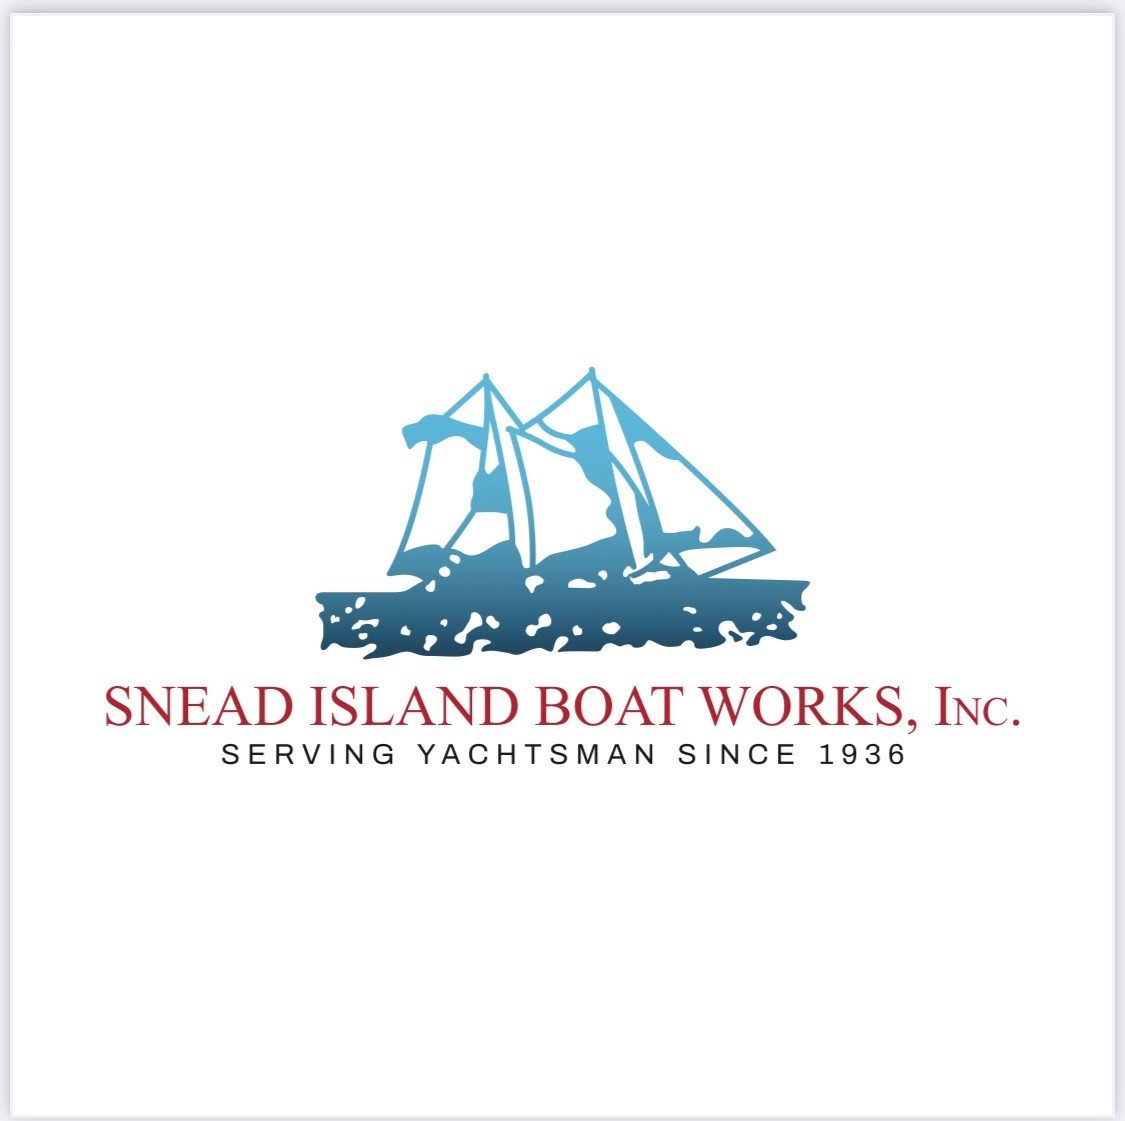 Snead Island Boat Works